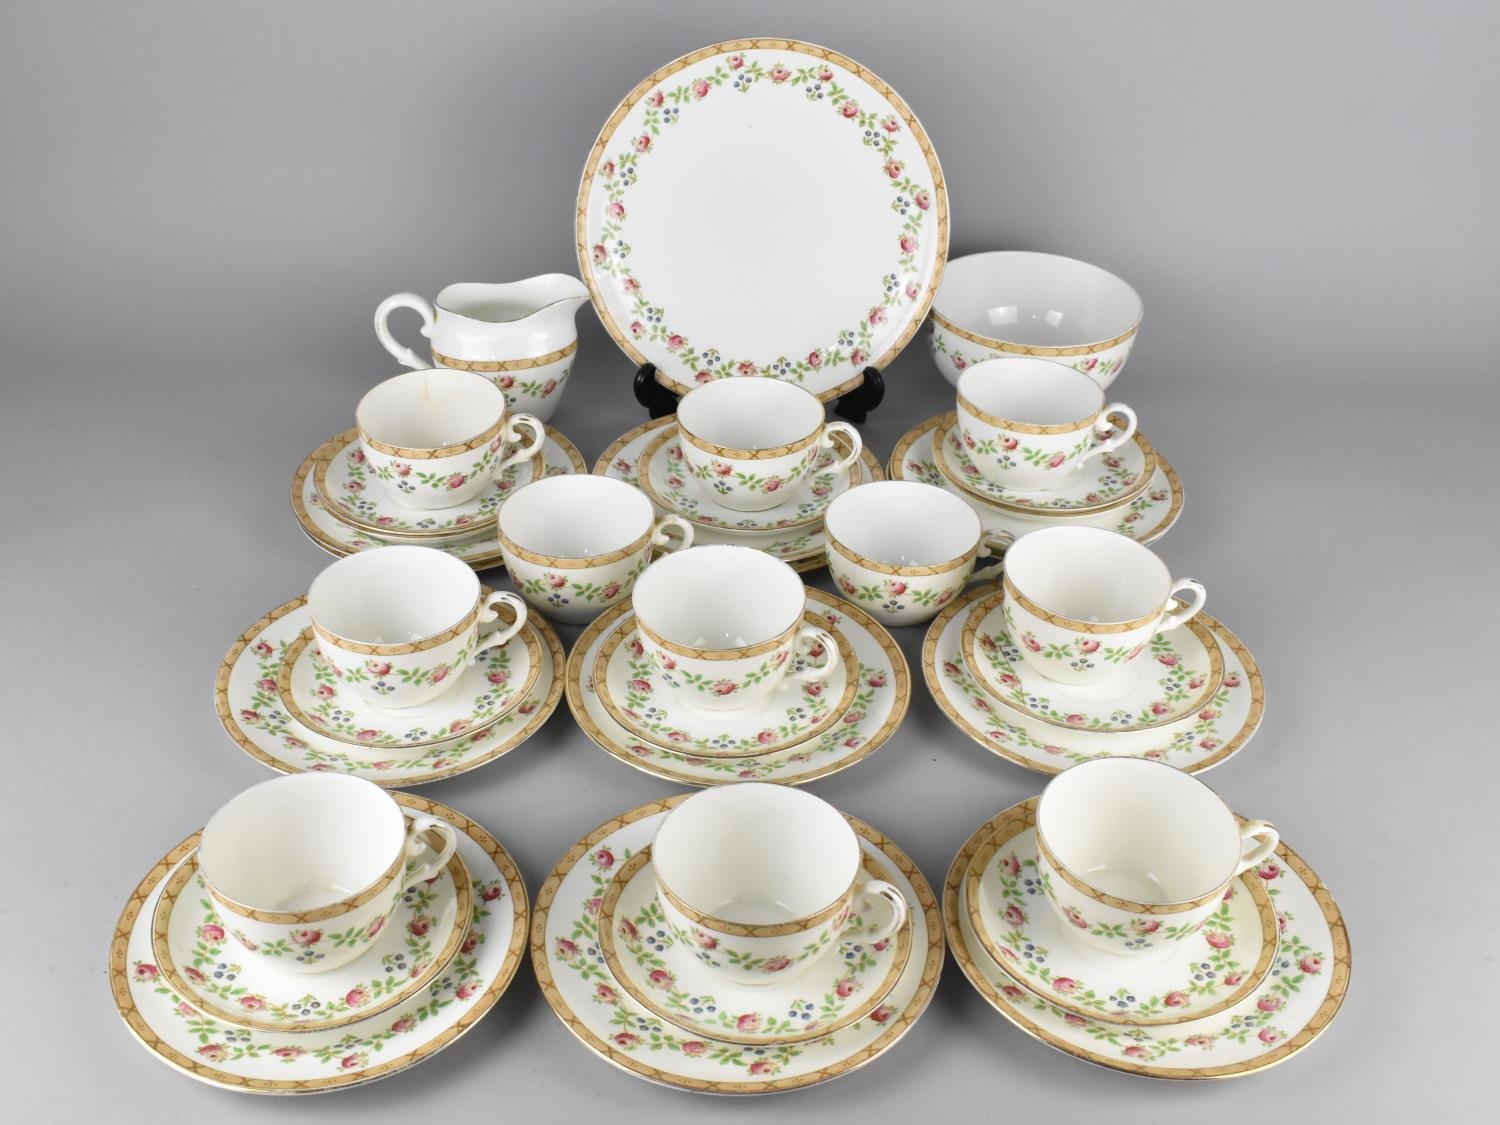 A Collingwoods Floral Banded Decorated Tea Set to Comprise Eleven Cups, Eleven Saucers, Twelve